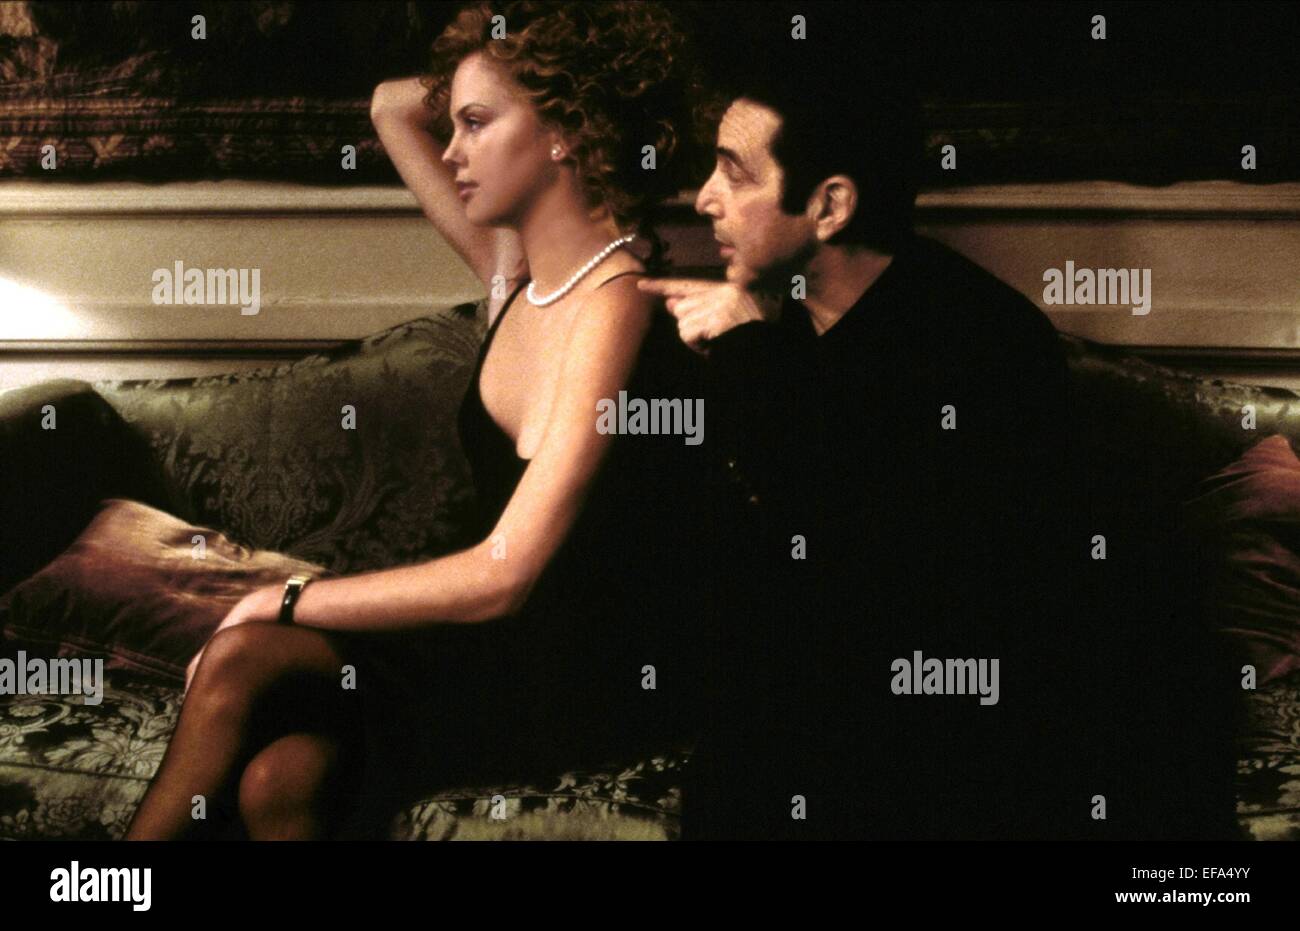 Charlize Theron Al Pacino The Devils Advocate 1997 Stockfotografie Alamy 